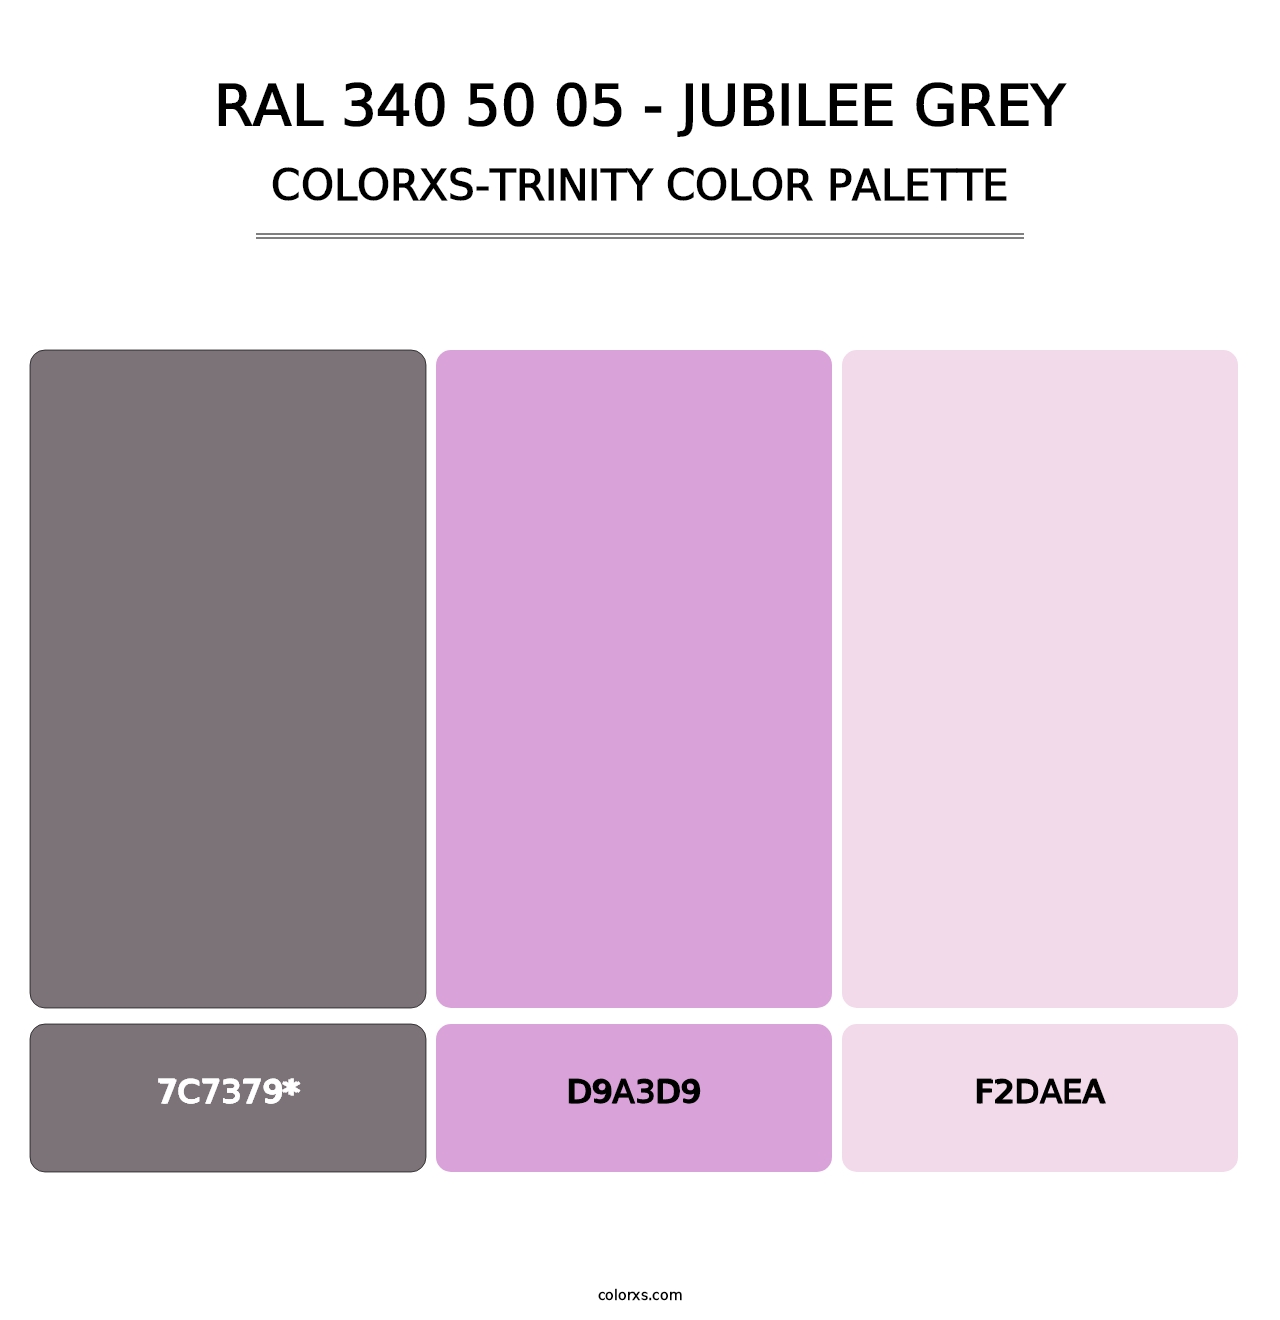 RAL 340 50 05 - Jubilee Grey - Colorxs Trinity Palette